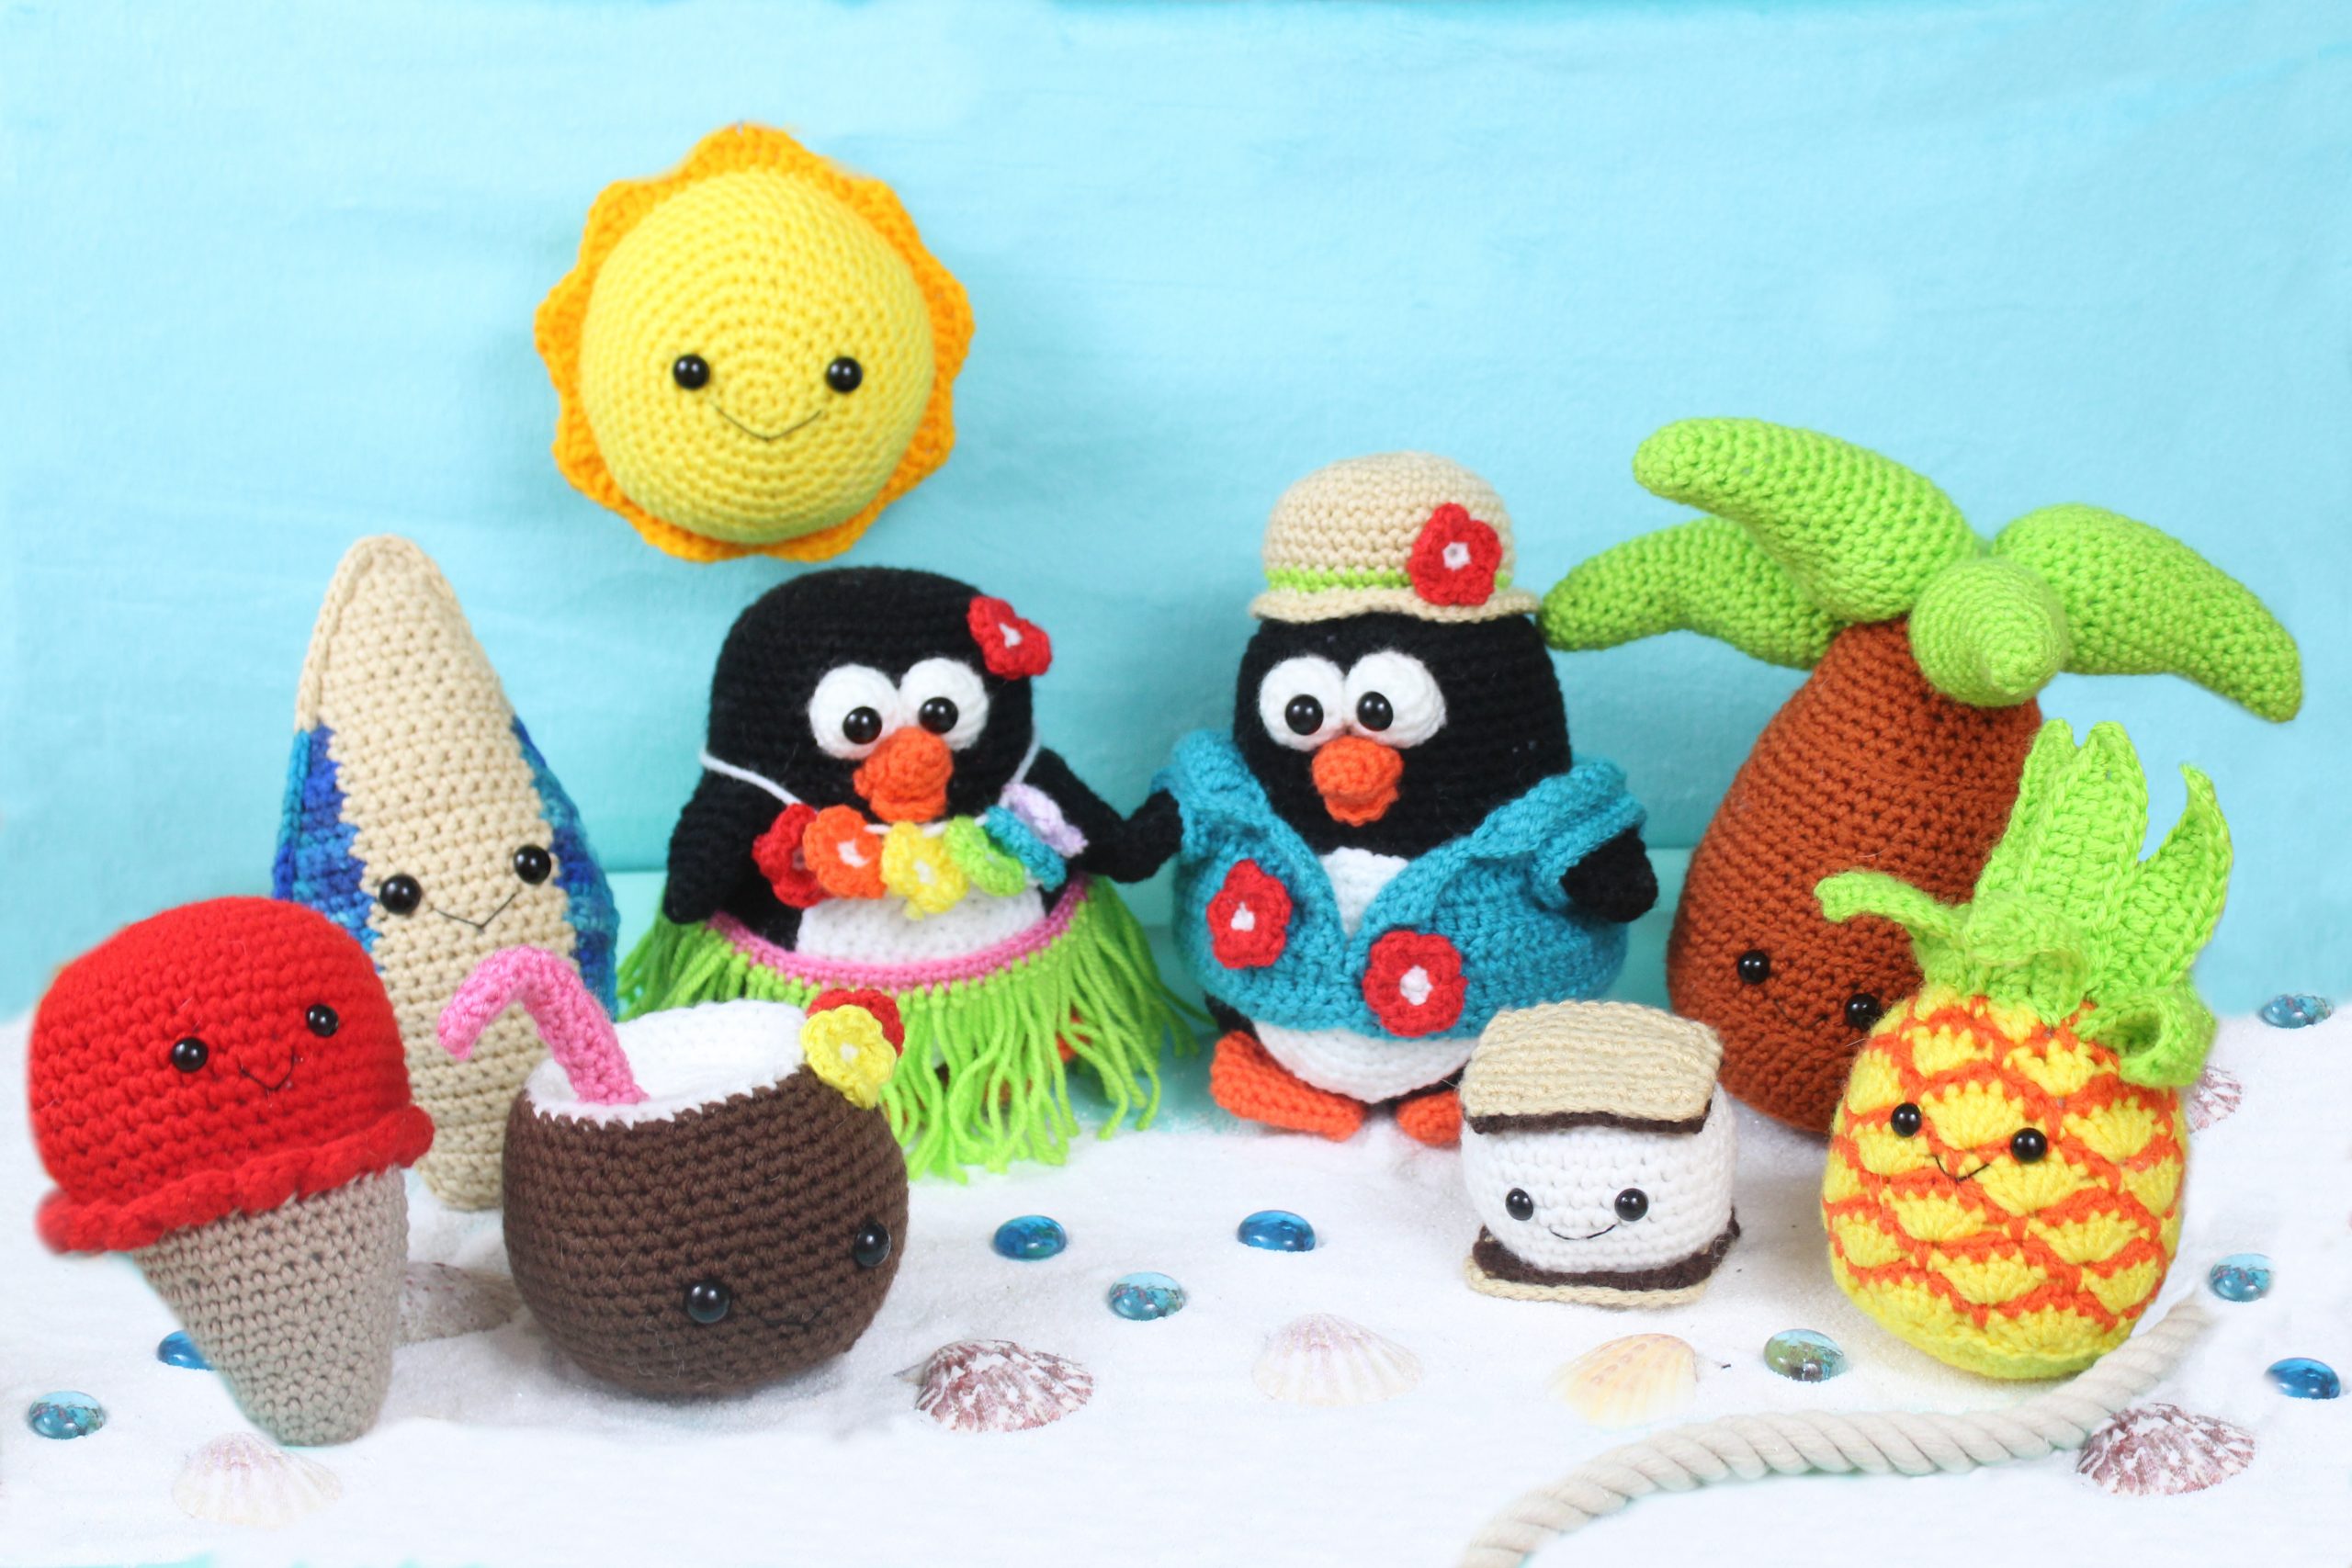 Summer Amigurumi Crochet Along - 8 Free Amigurumi Patterns